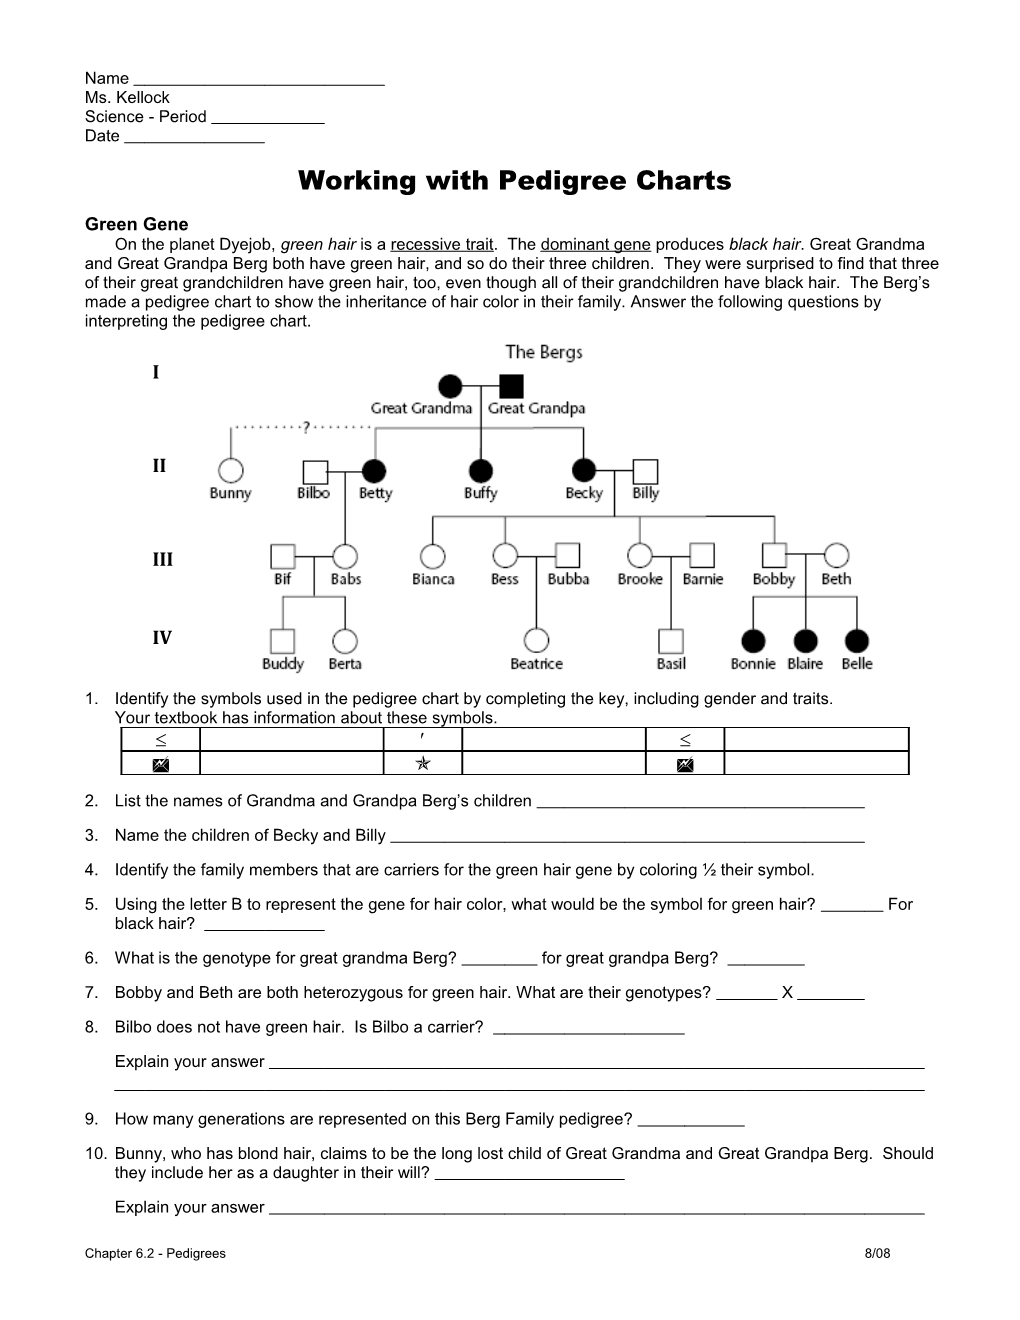 Working with Pedigree Charts